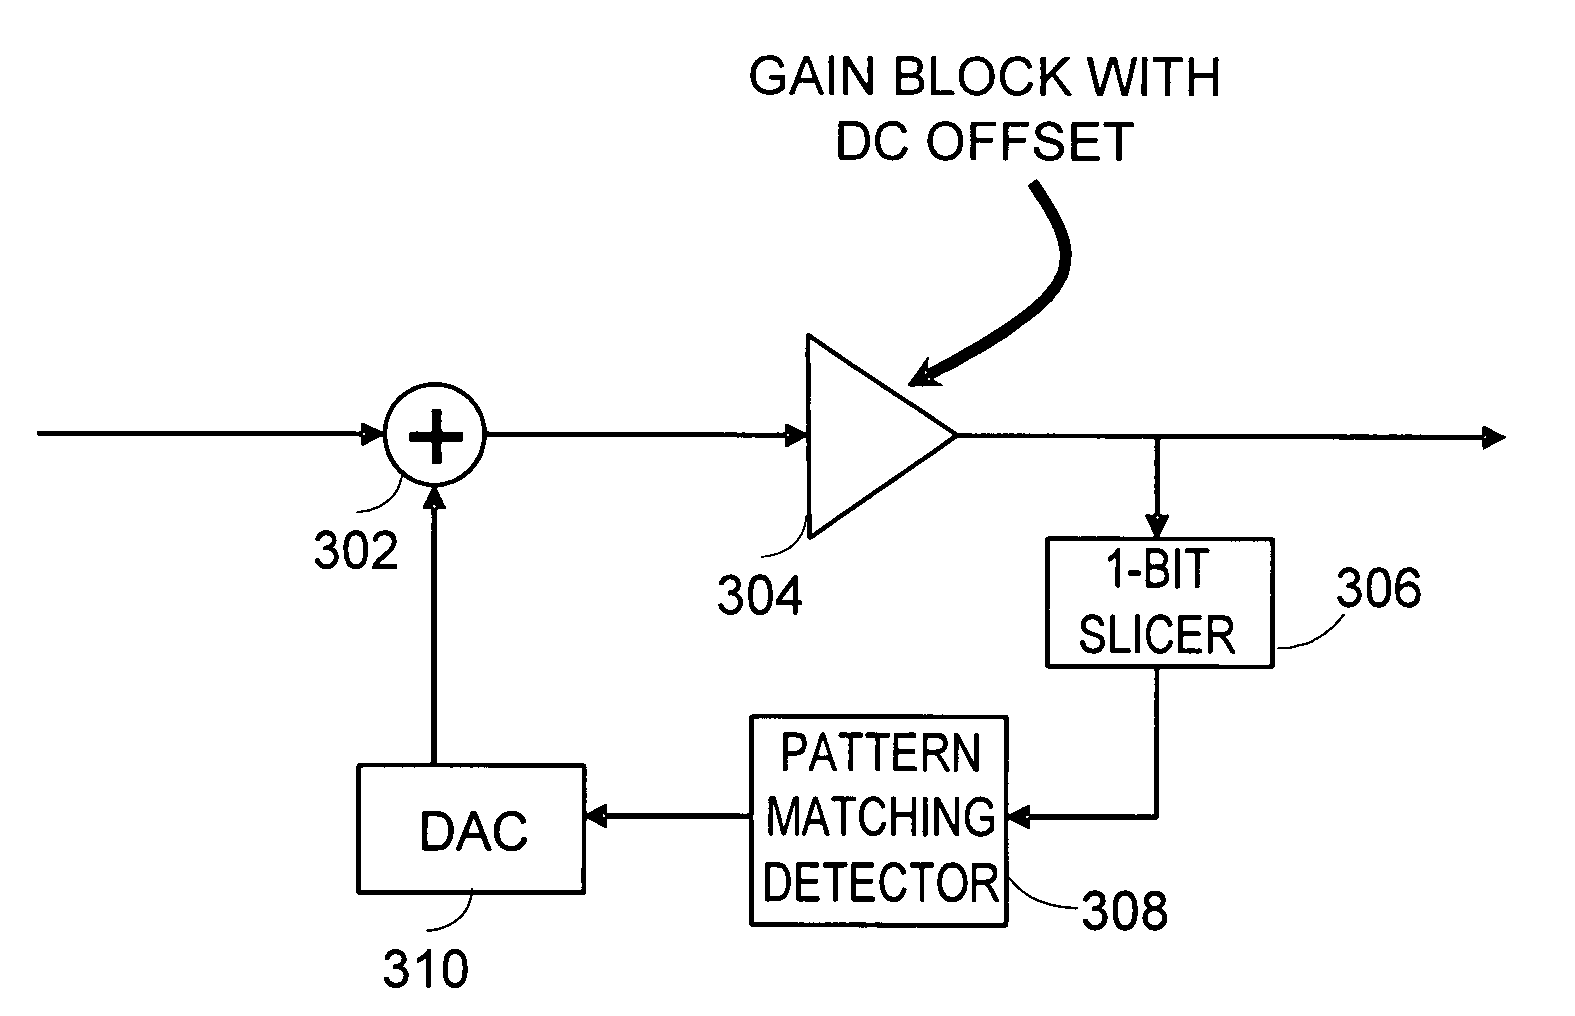 Pattern-based DC offset correction